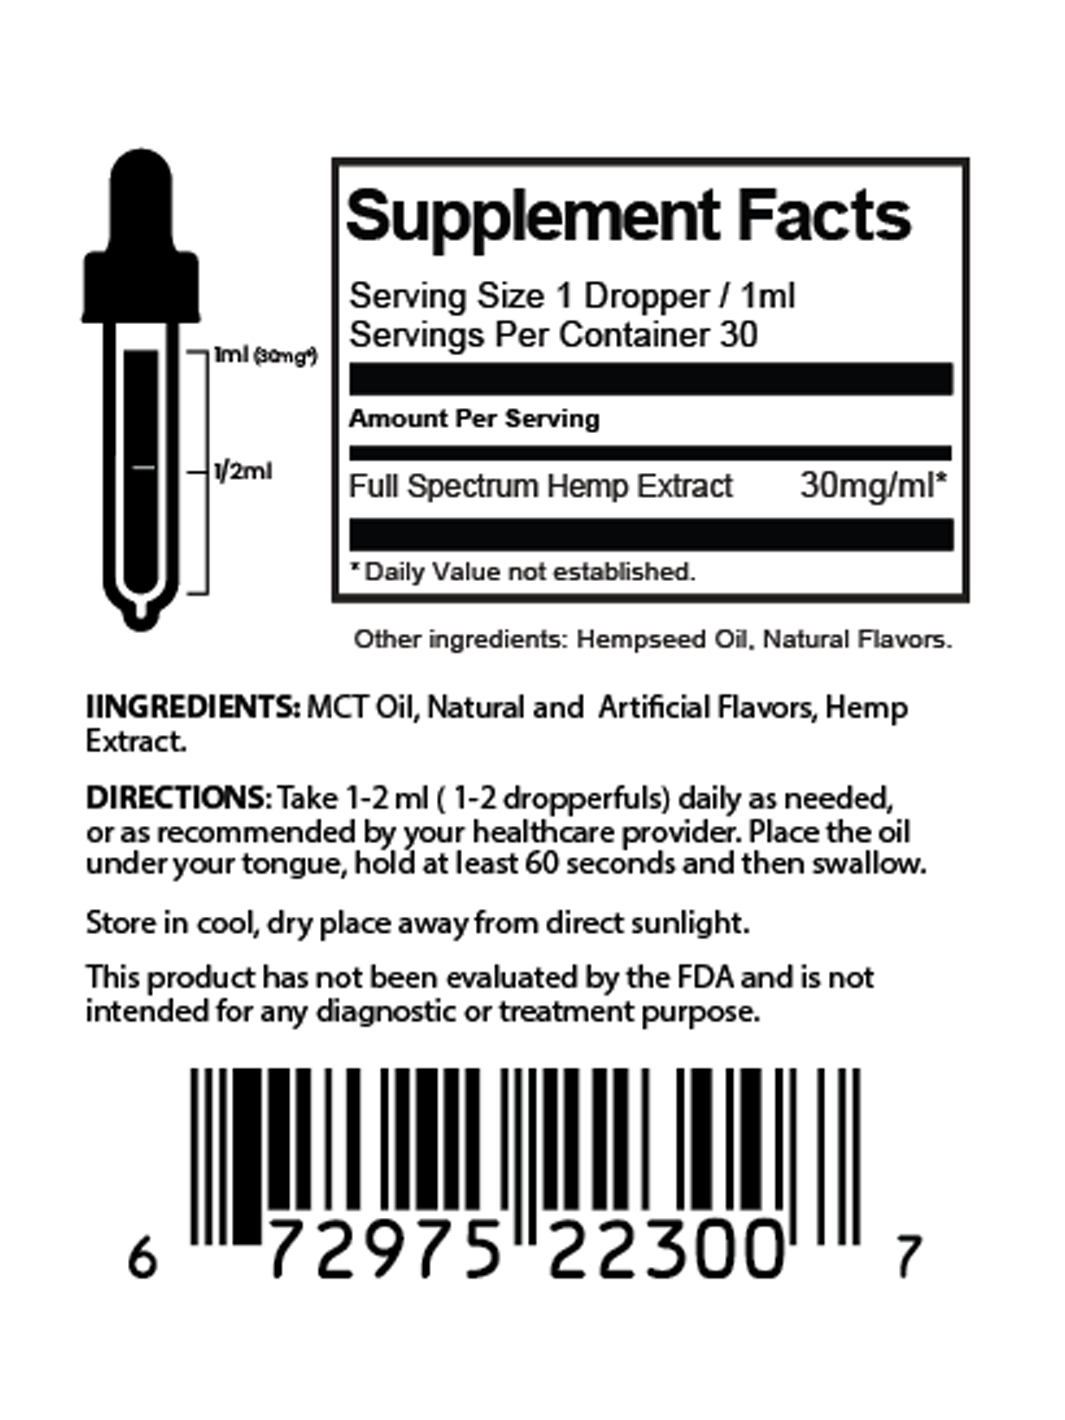 Korasana supplement facts label